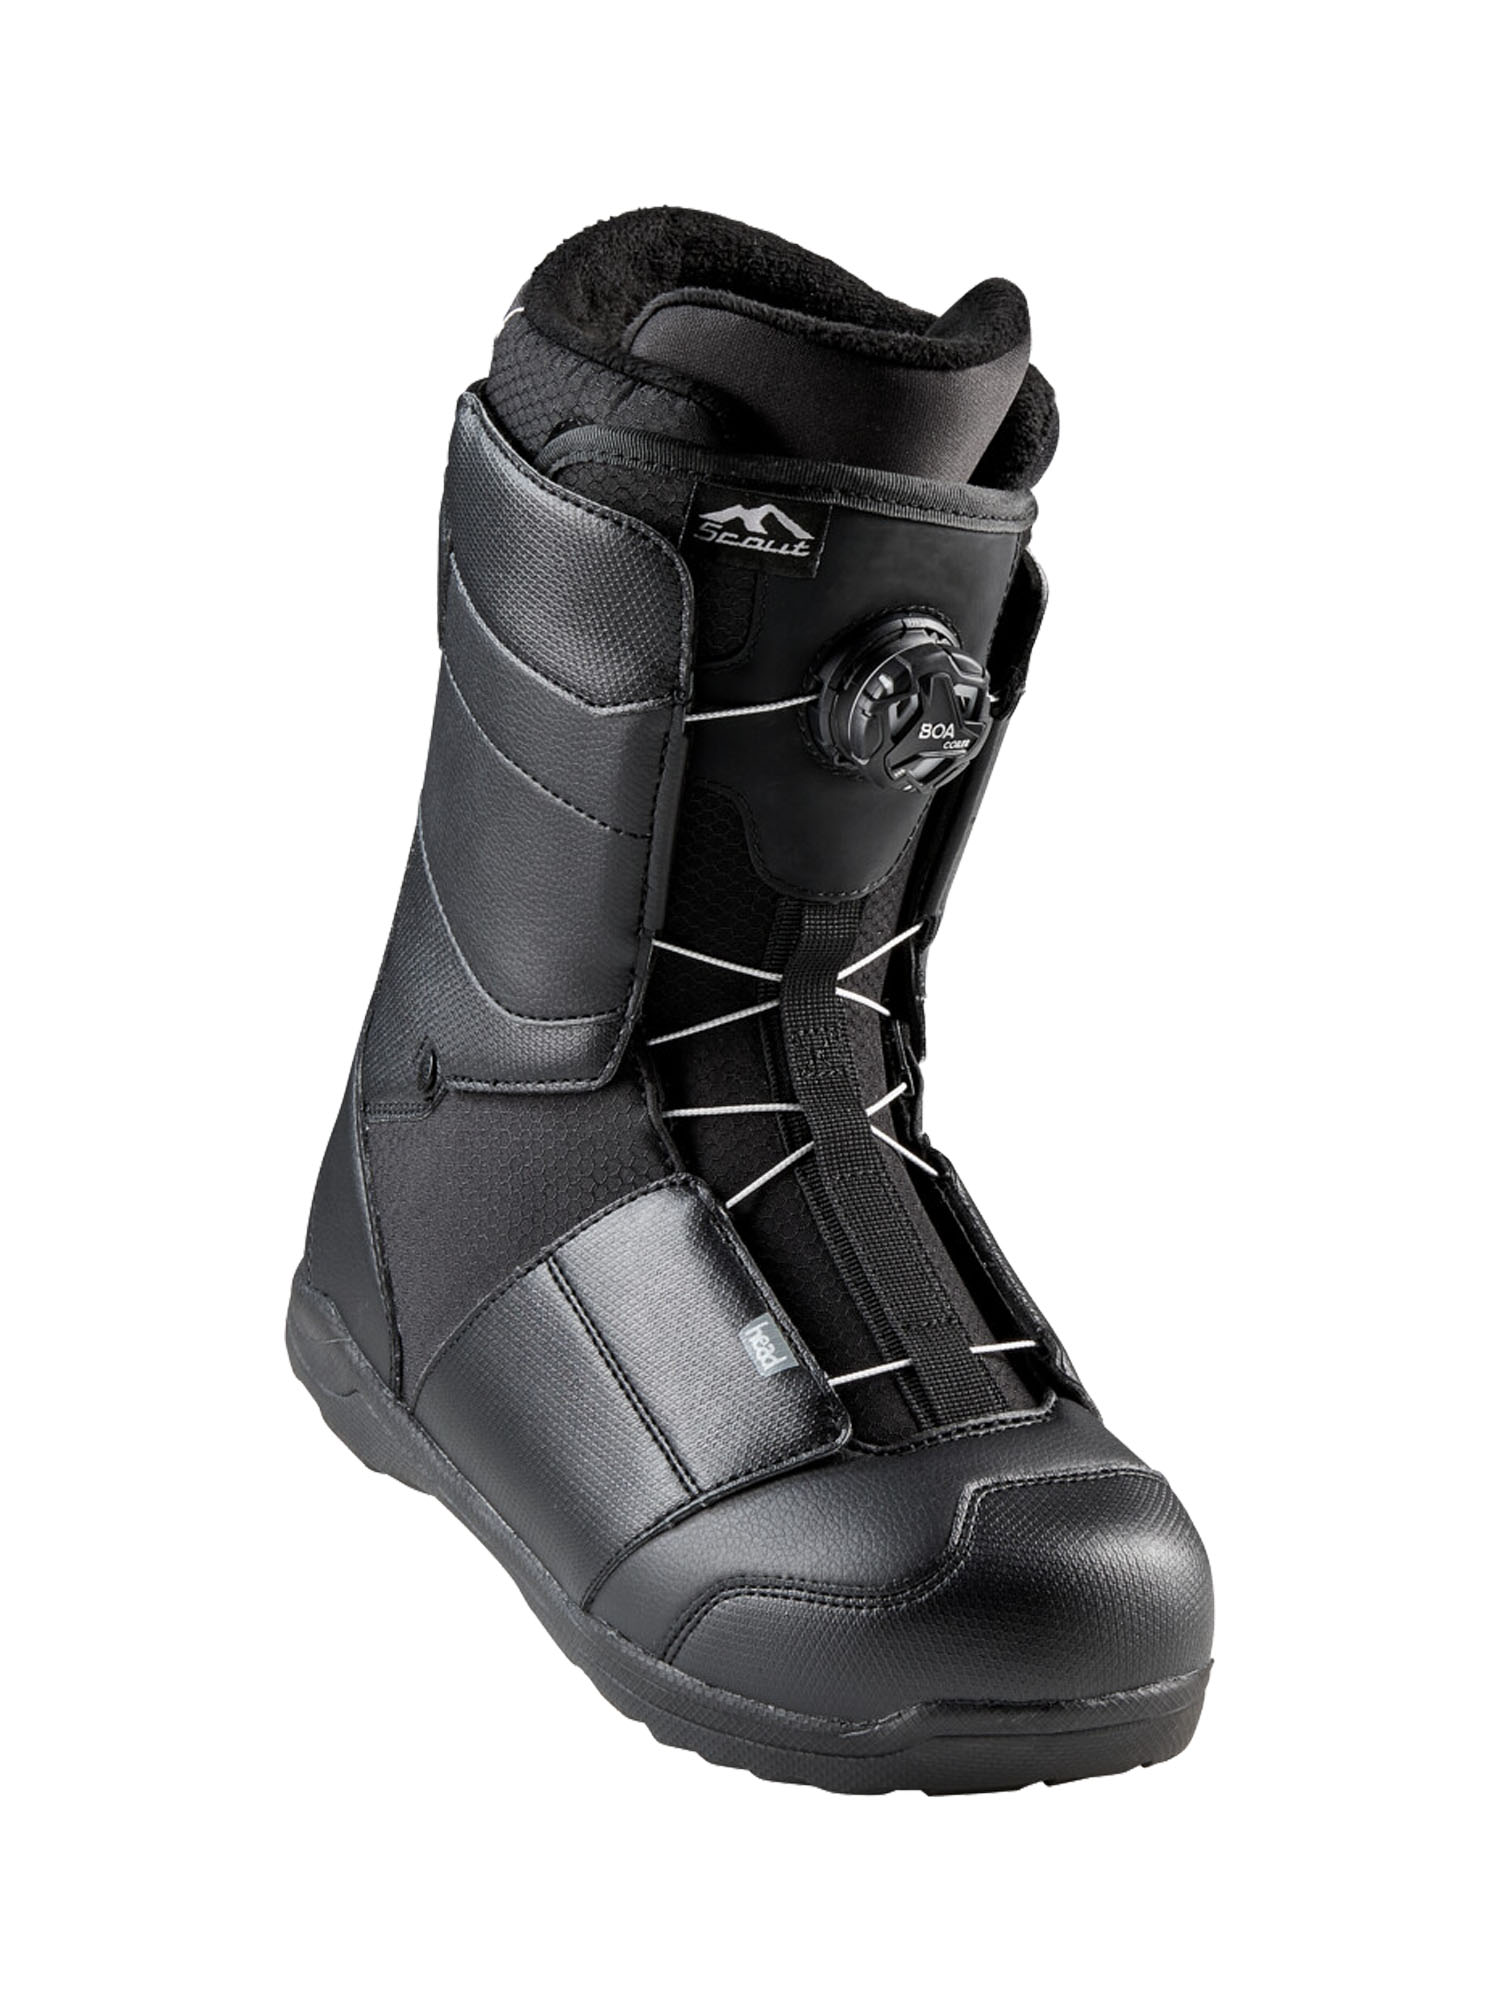 Ботинки для сноуборда HEAD Scout Lyt Boa Coiler Black